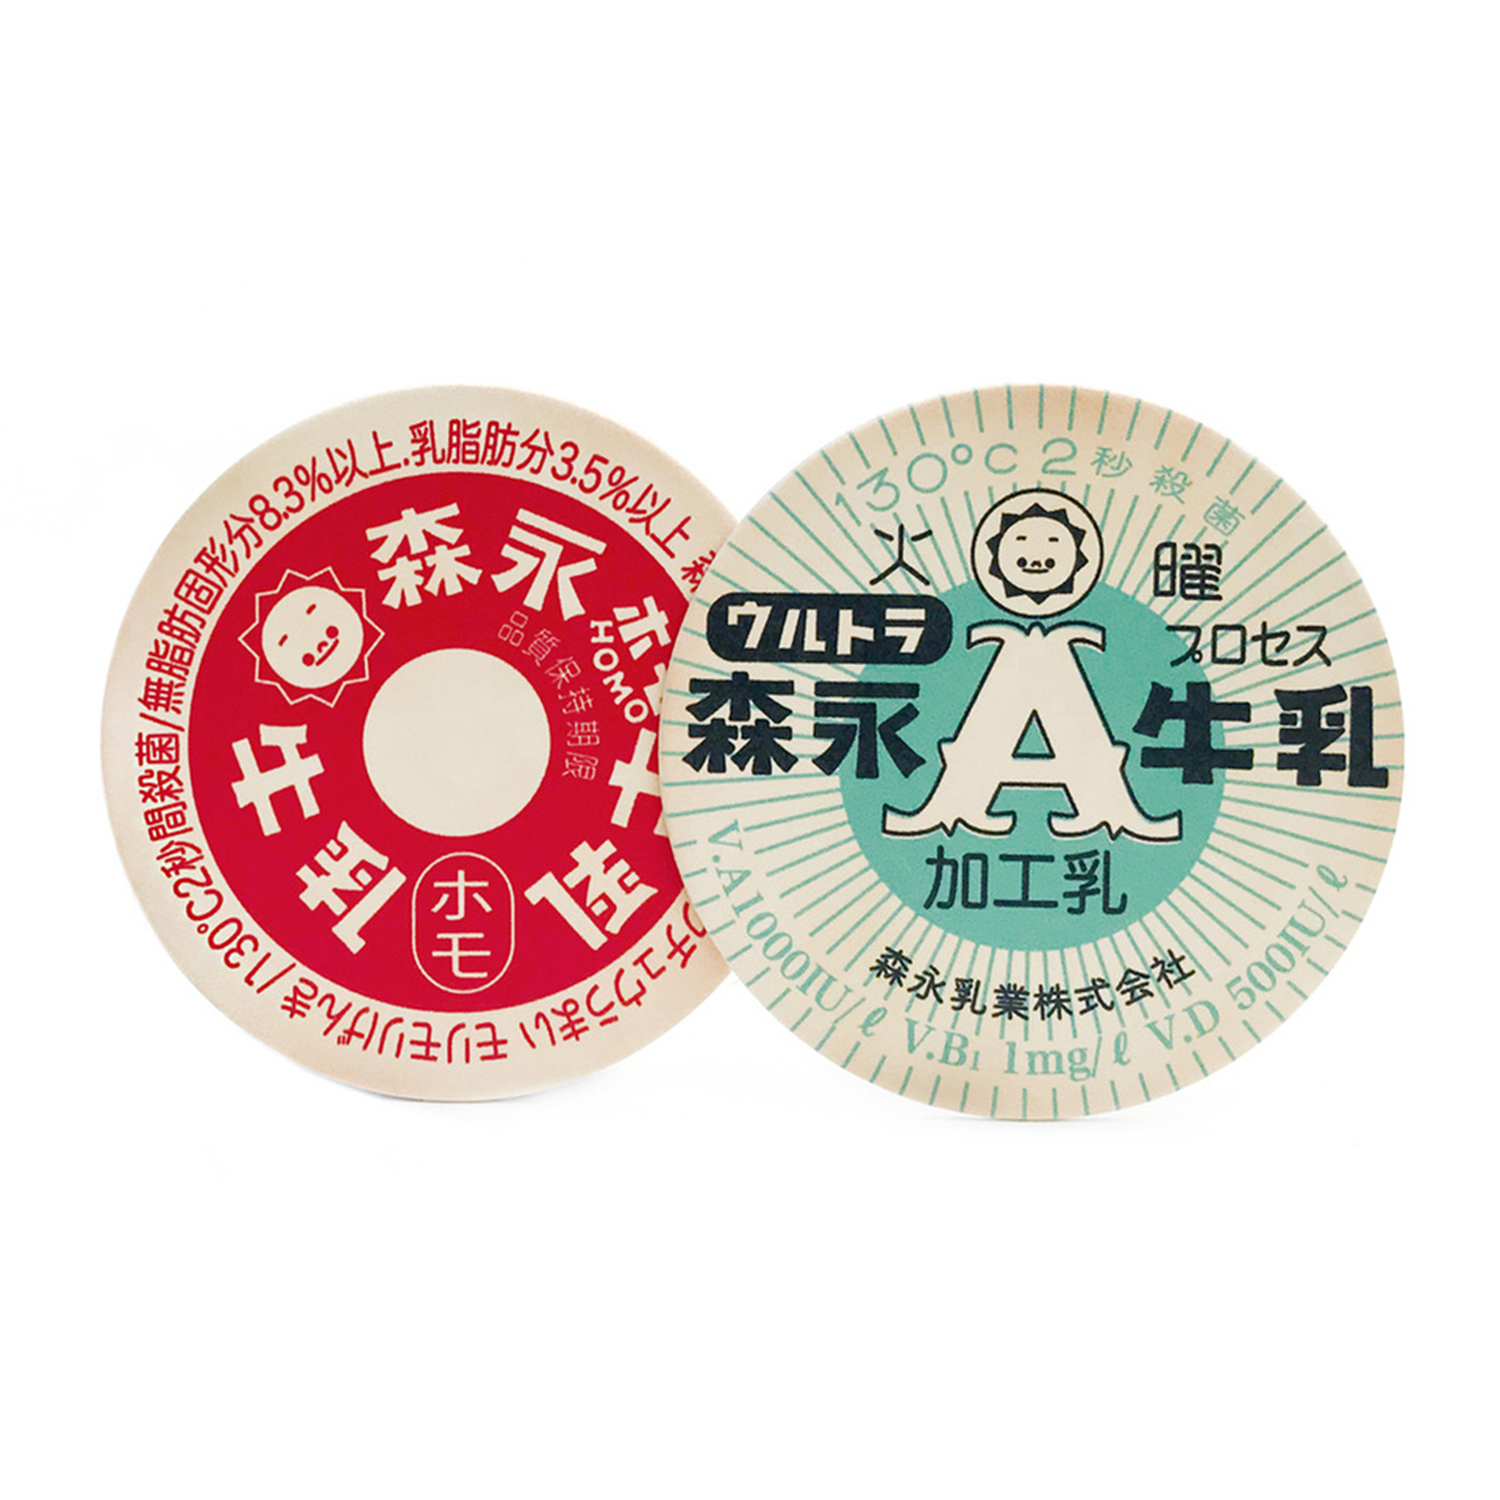 Set of 2 coasters with Morinaga milk bottle lid design